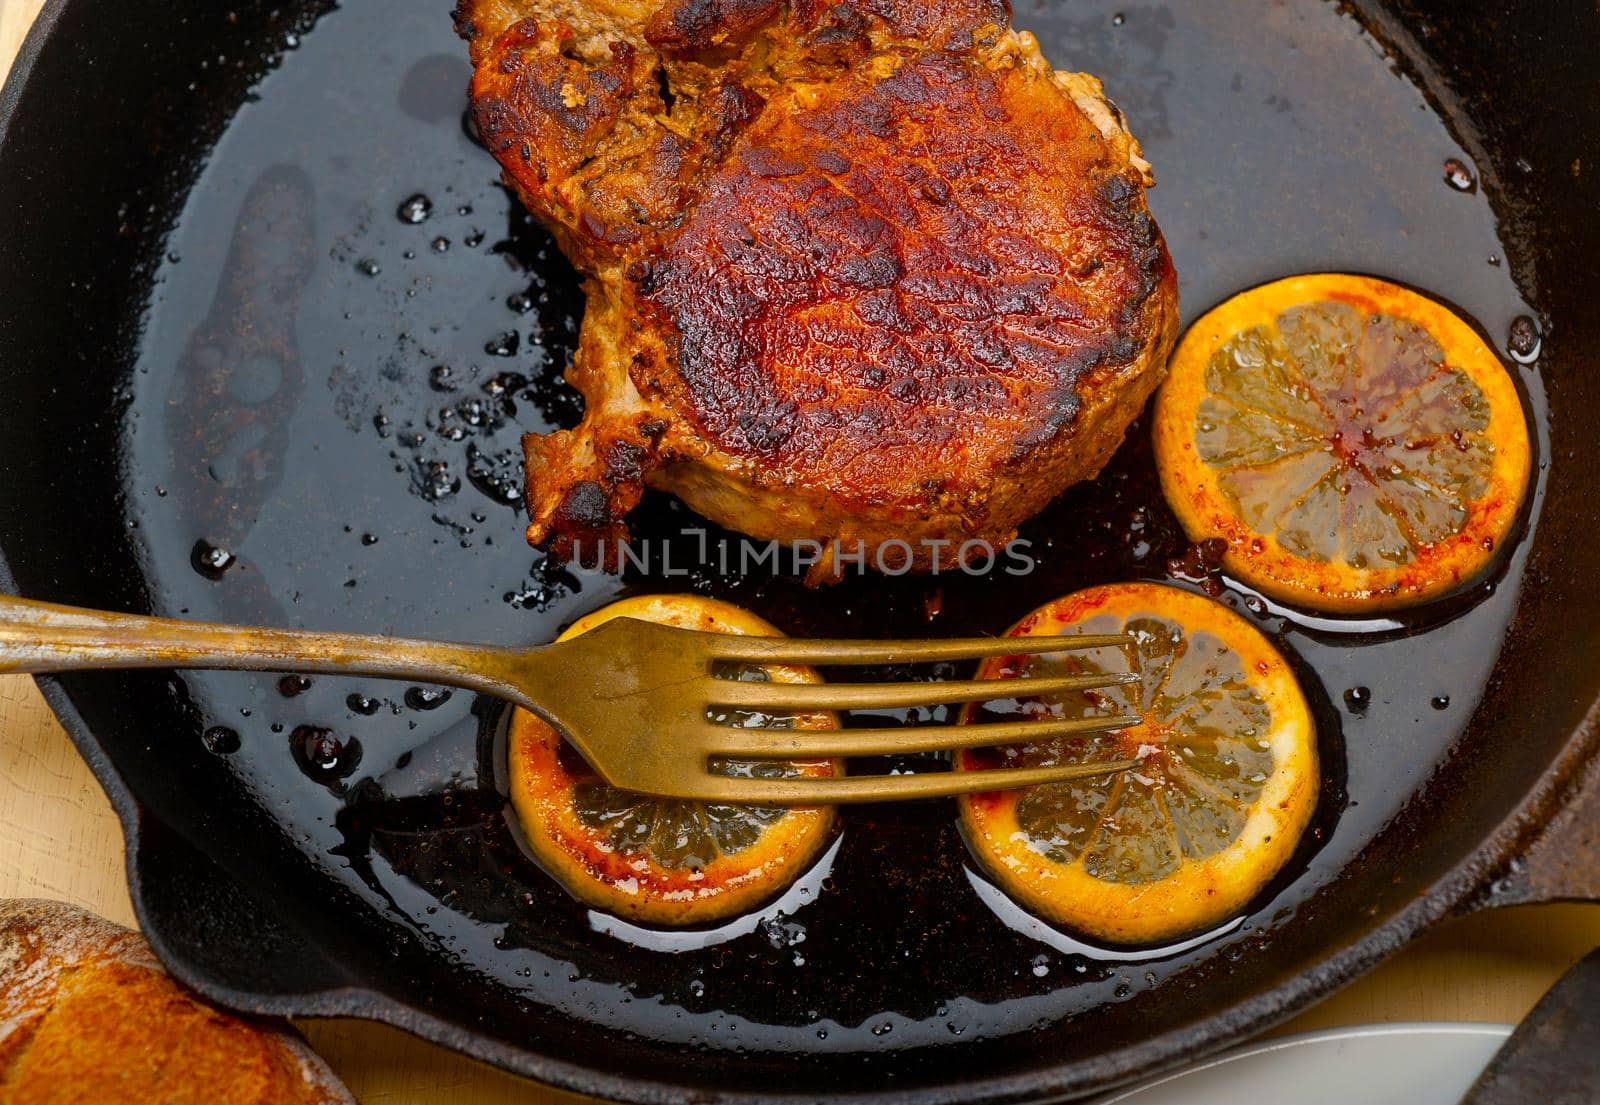 pork chop seared on iron skillet by keko64